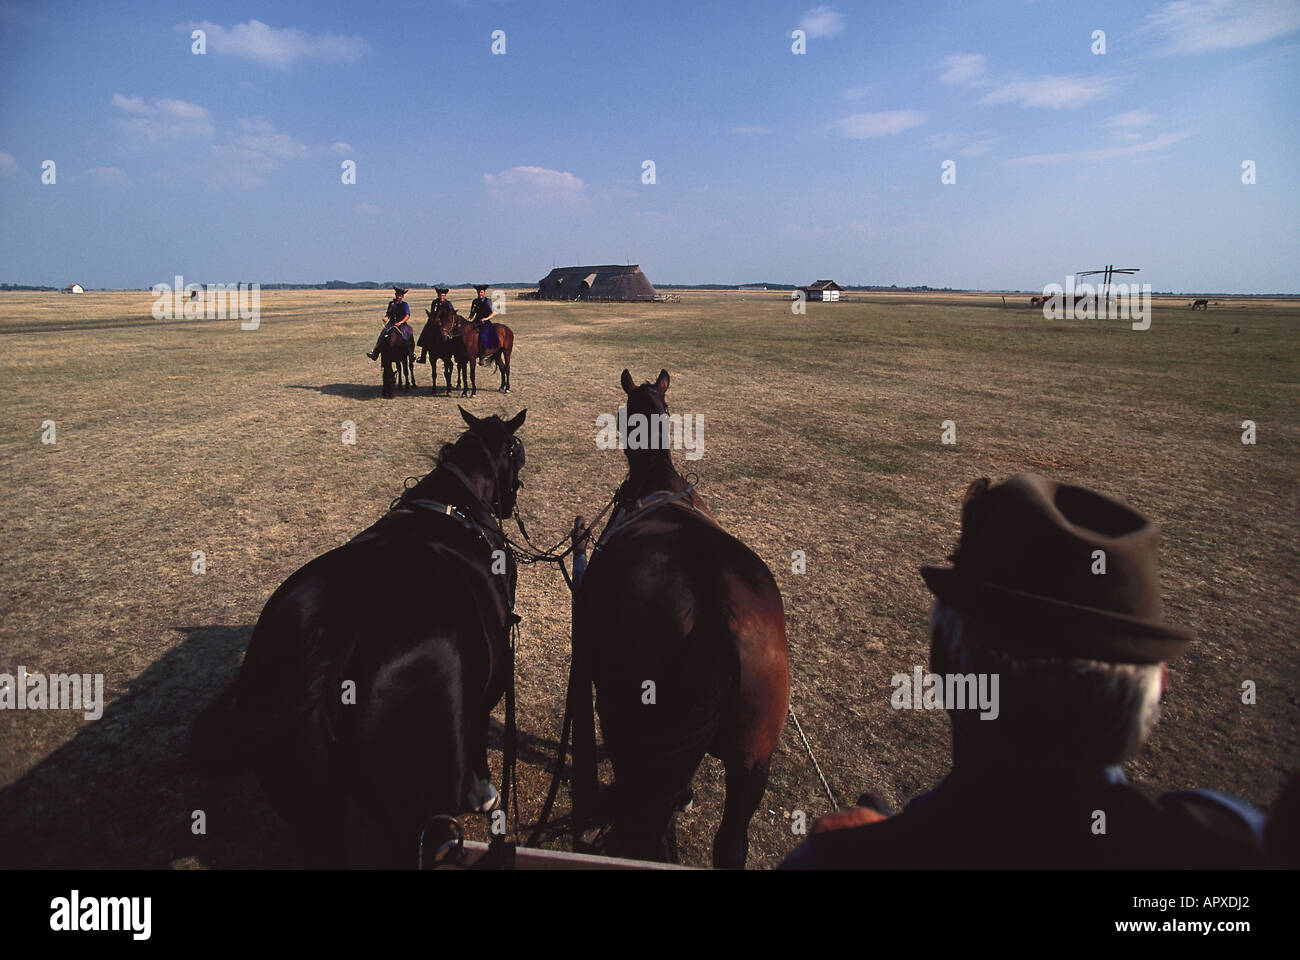 Horse carriages driving through steppe, Hortobagyi Puszta, Hungary Stock Photo